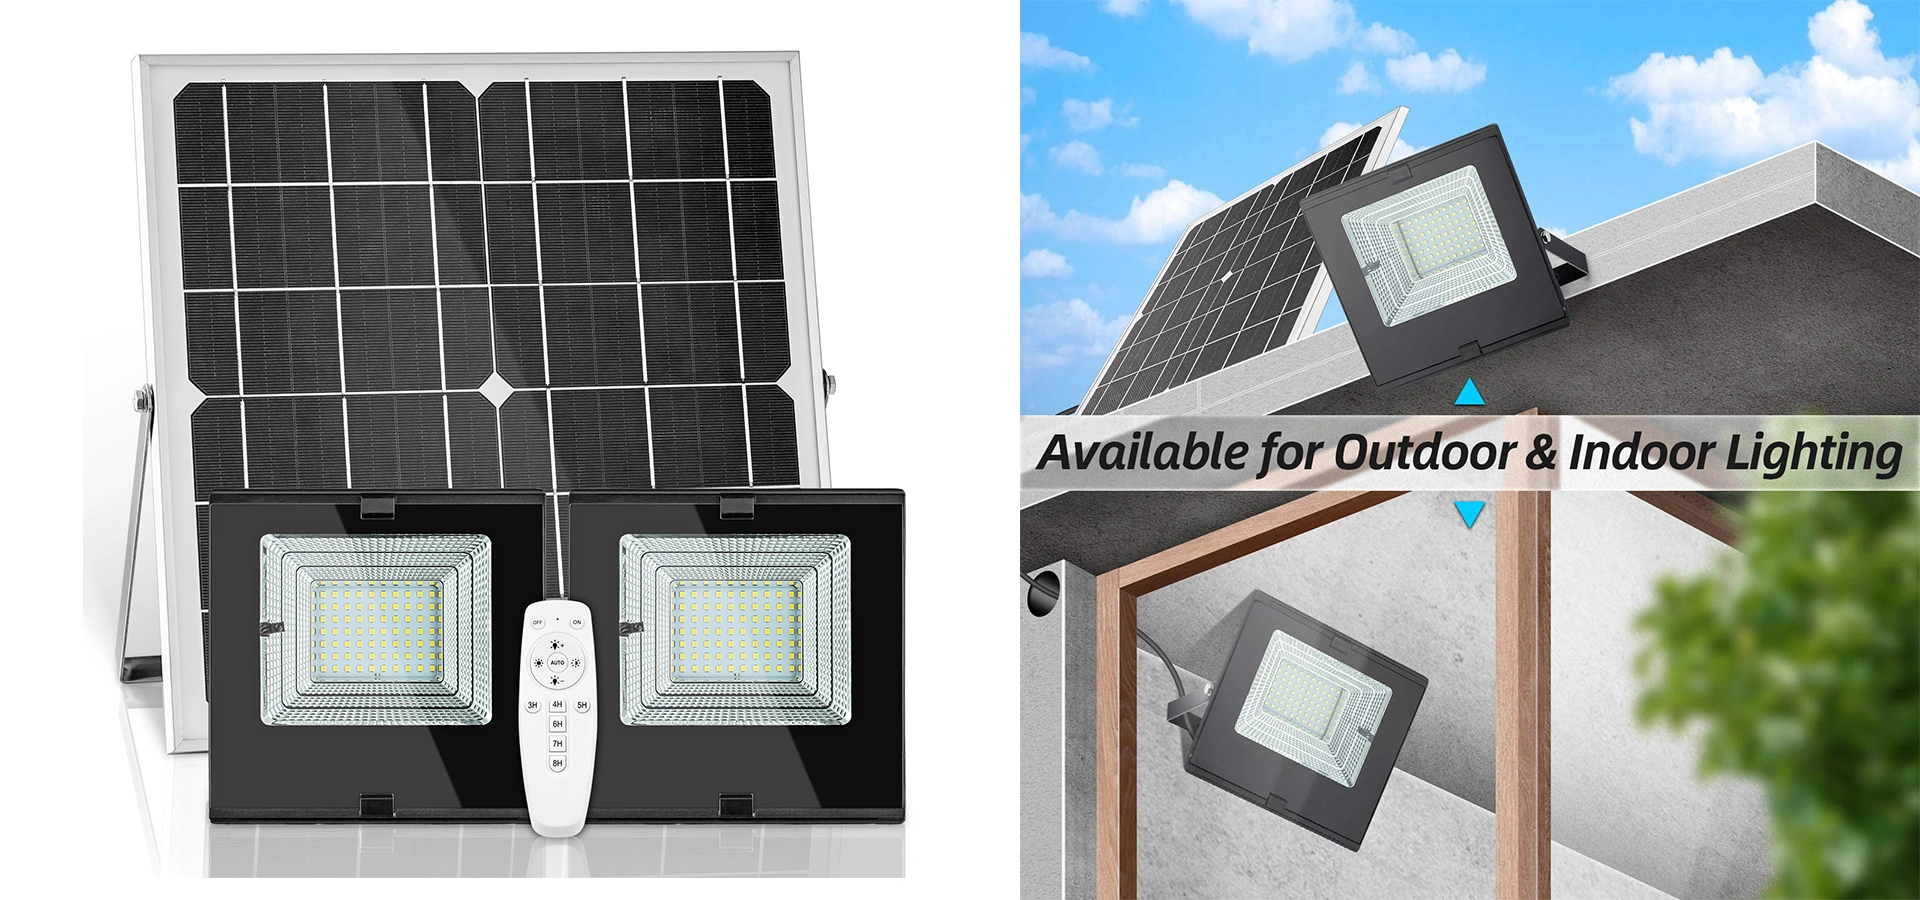 Sunbonar DG30W Solar flood light dual lamp available for Outdoor@Indoor Lighting